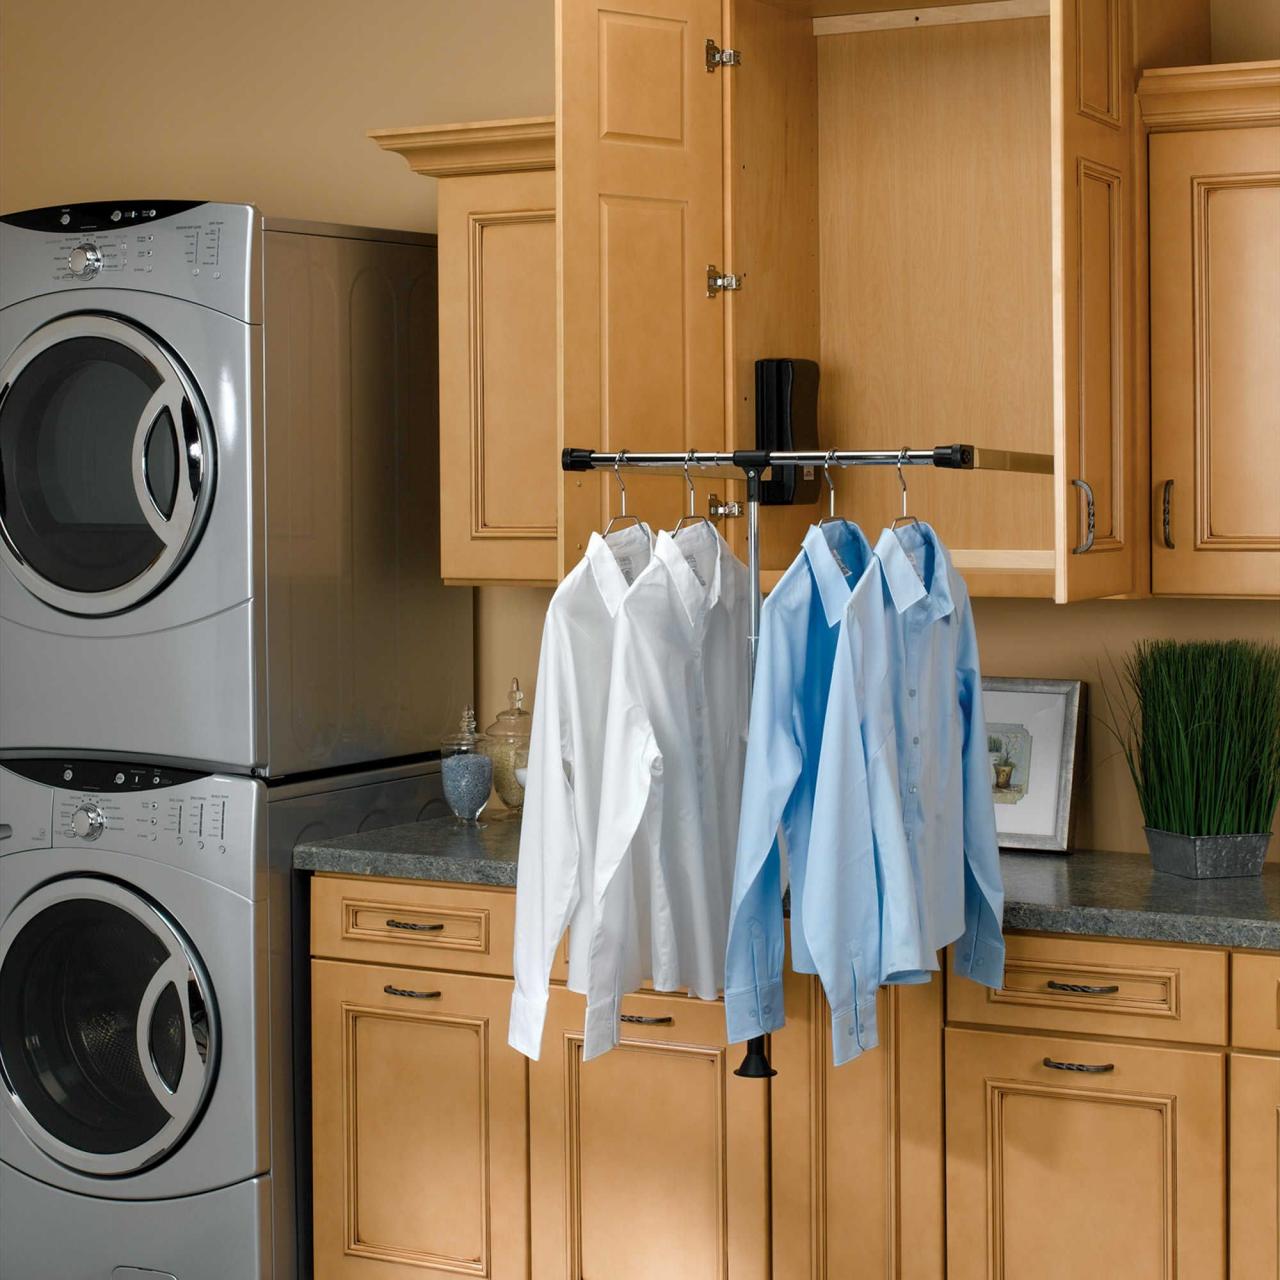 Diy Laundry Room Shelf With Hanging Rod / Top Laundry Room Ideas Shelf